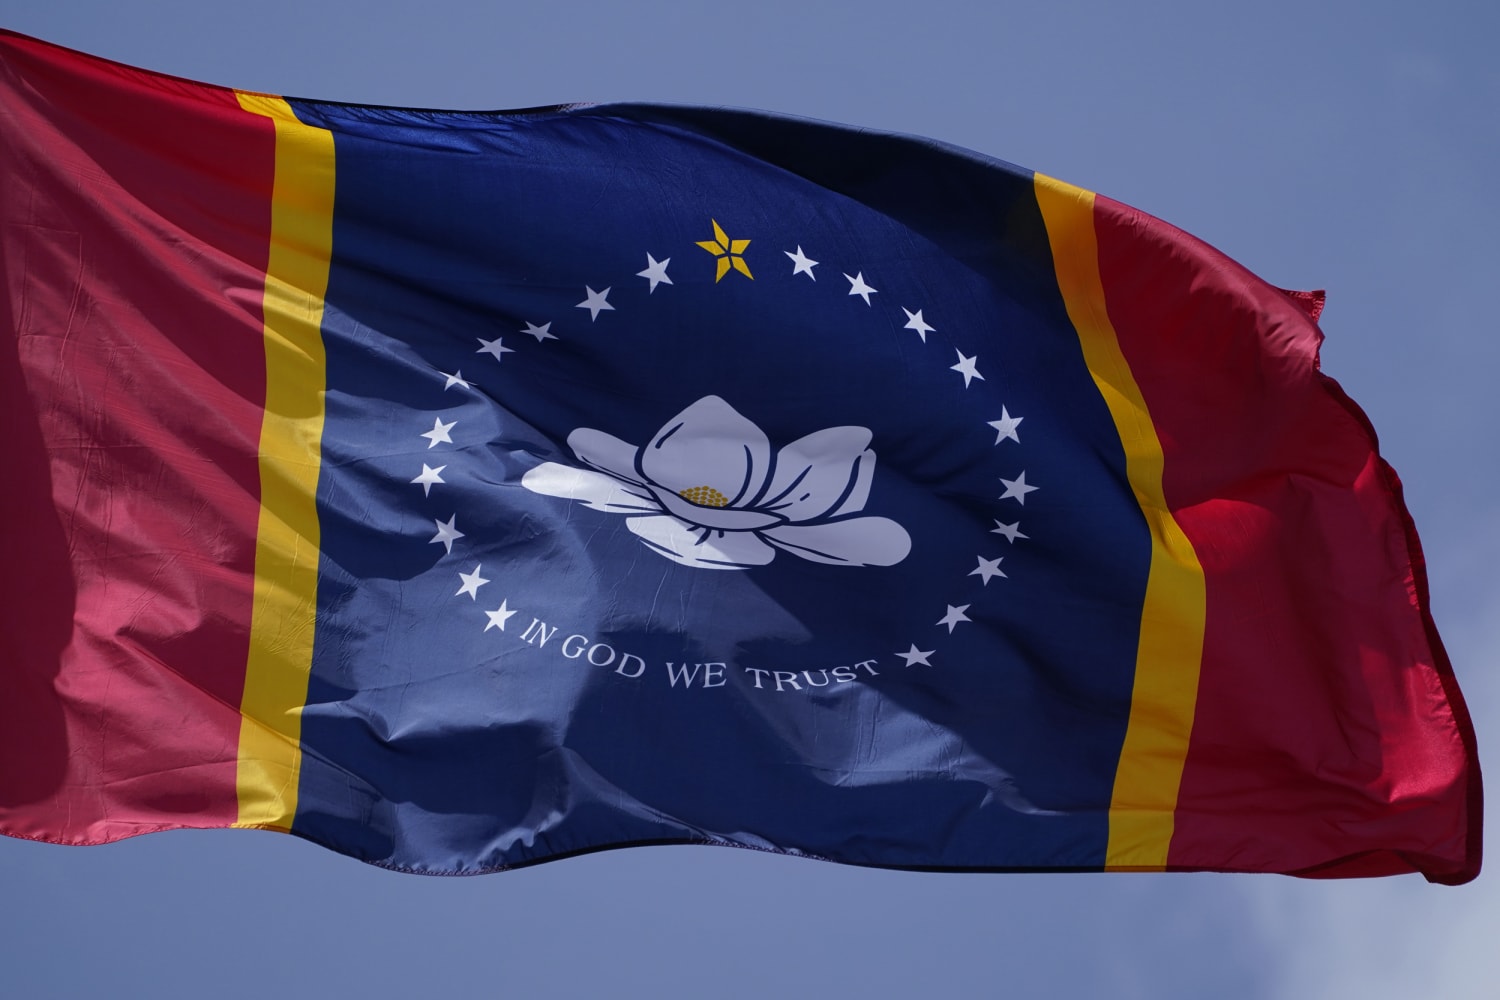 New Mississippi flag design to appear on November ballot after Confederate emblem dropped